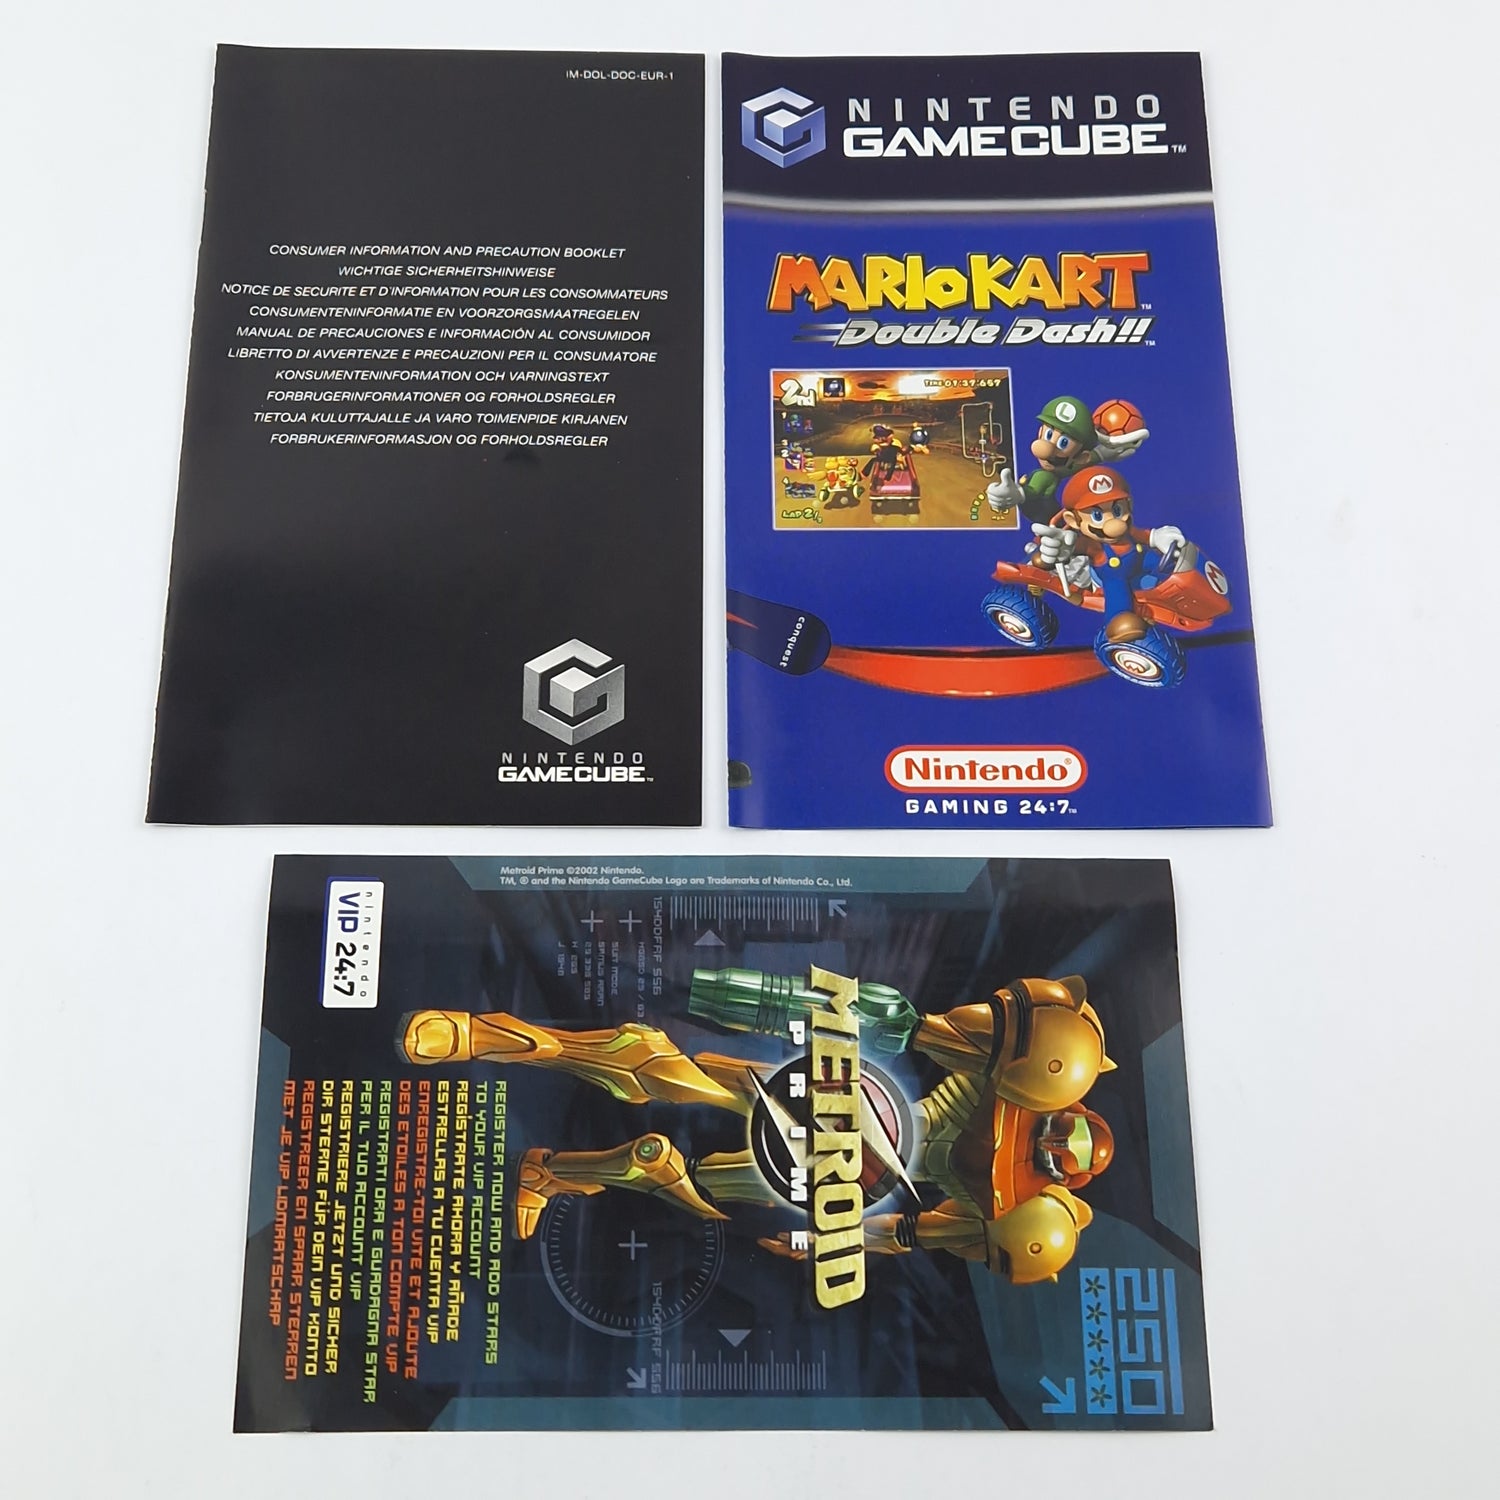 Nintendo Gamecube Game: Metroid Prime - CD Instructions OVP PAL GC